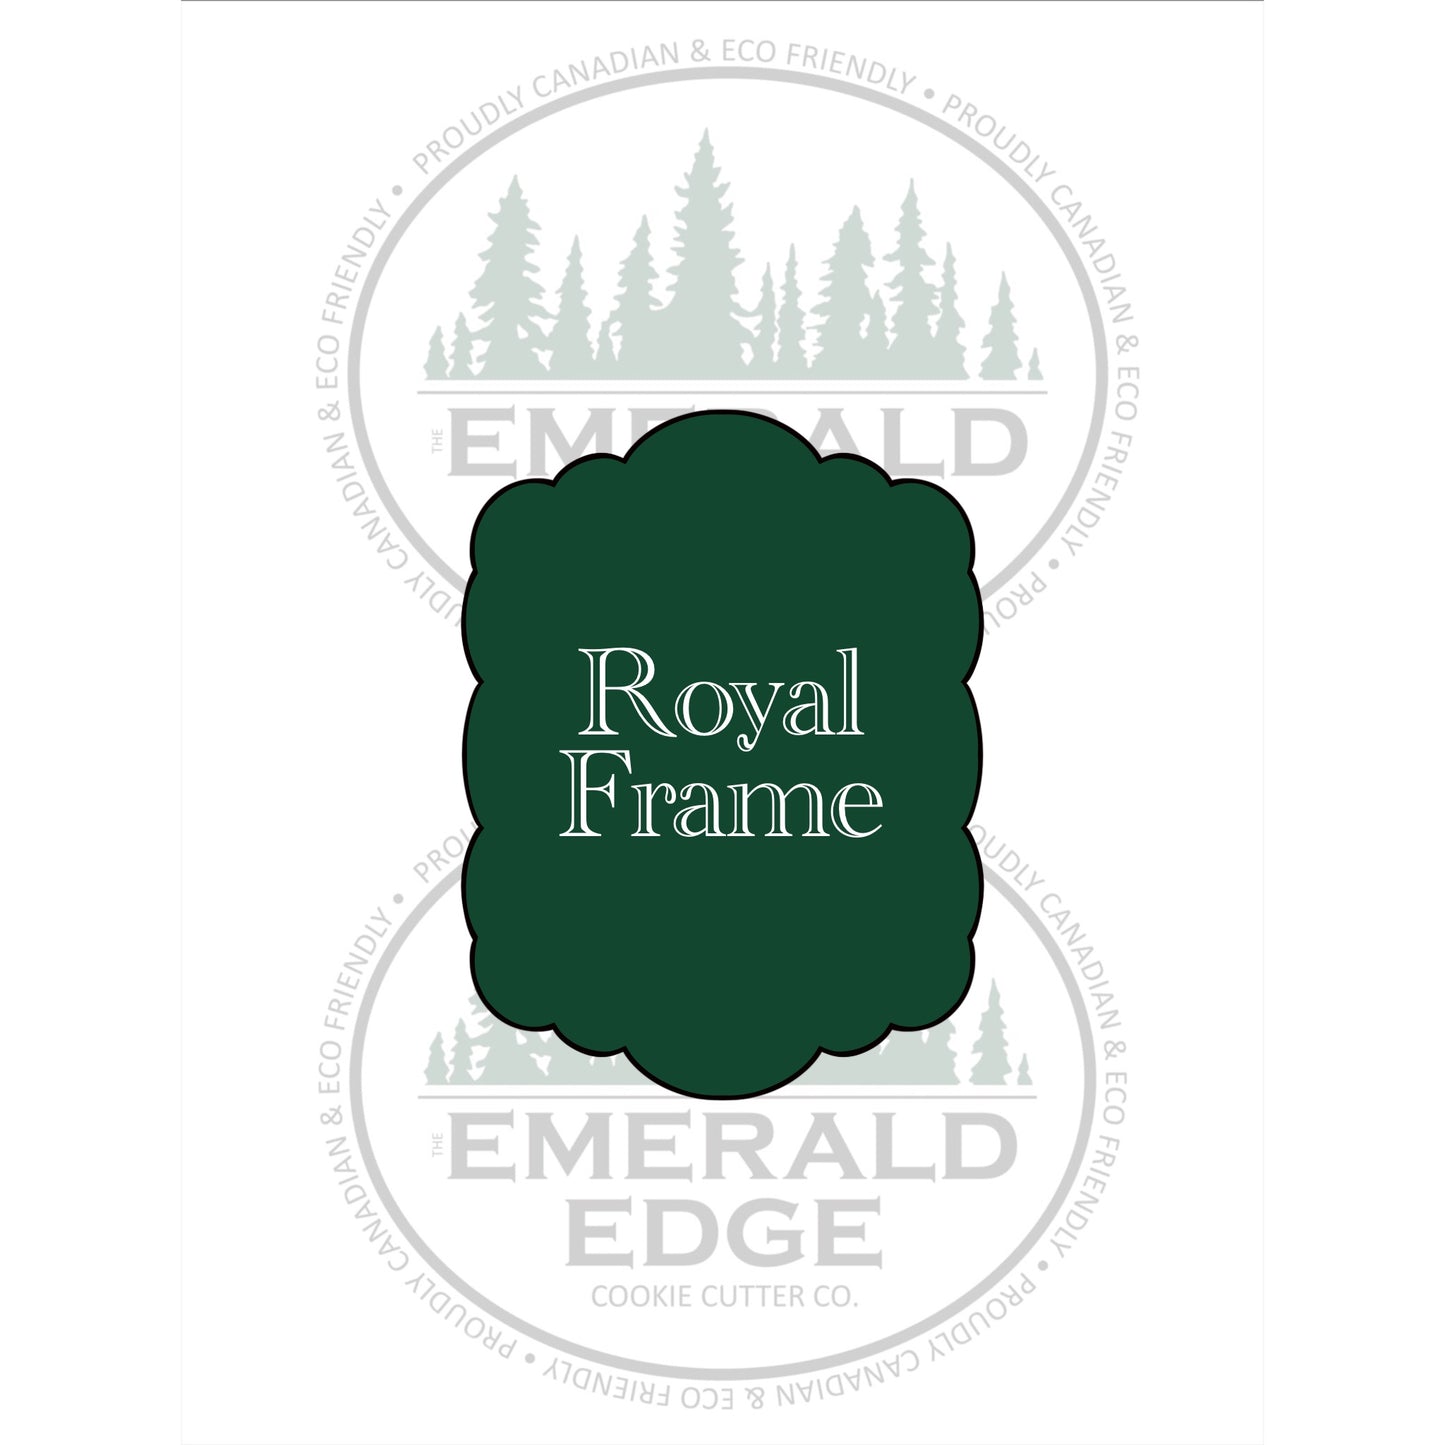 The Royal Frame